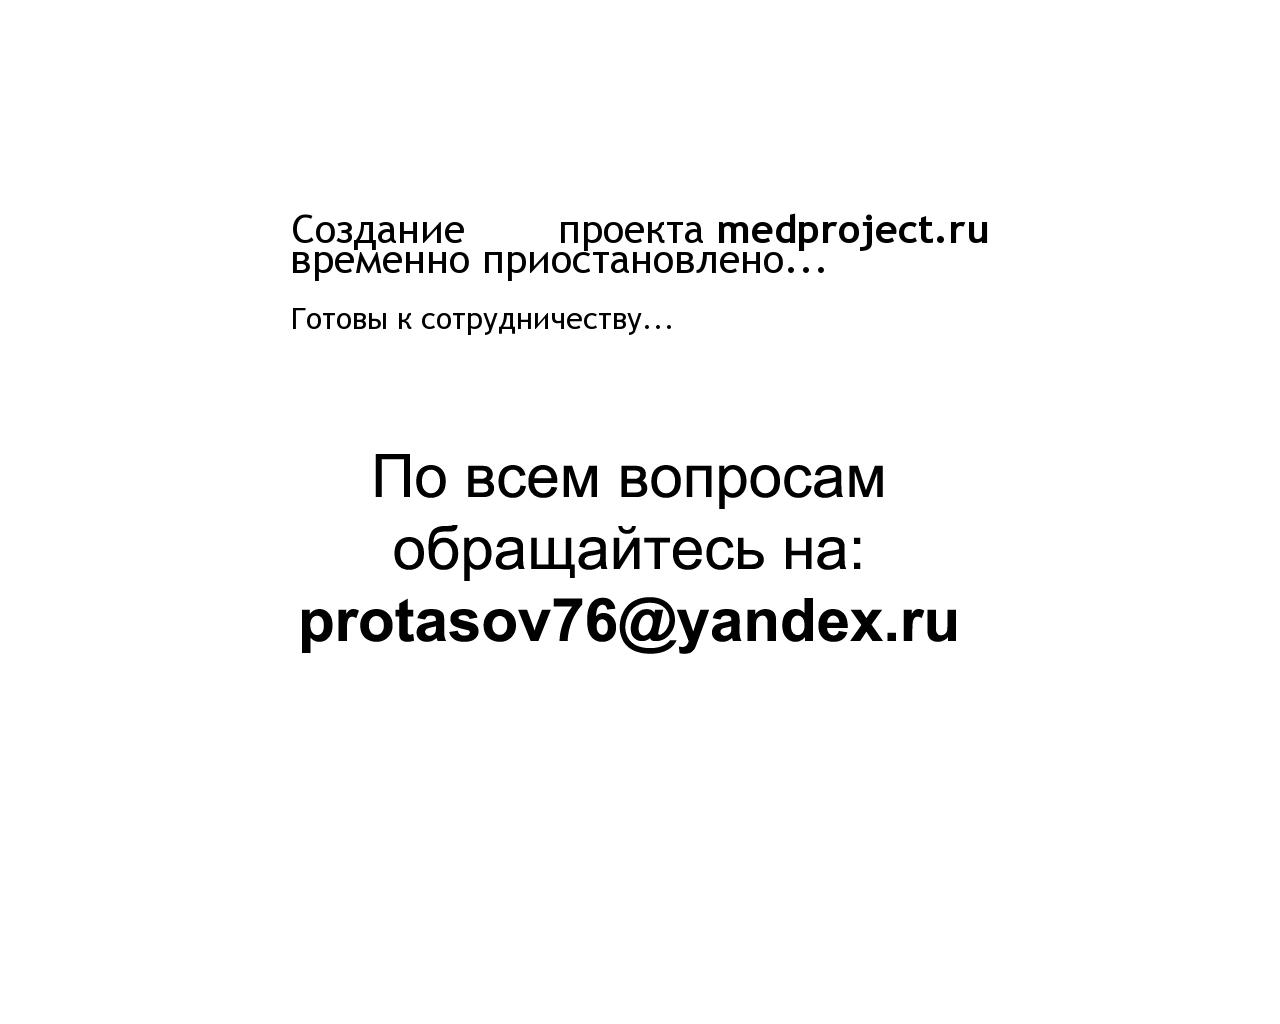 Изображение сайта medproject.ru в разрешении 1280x1024